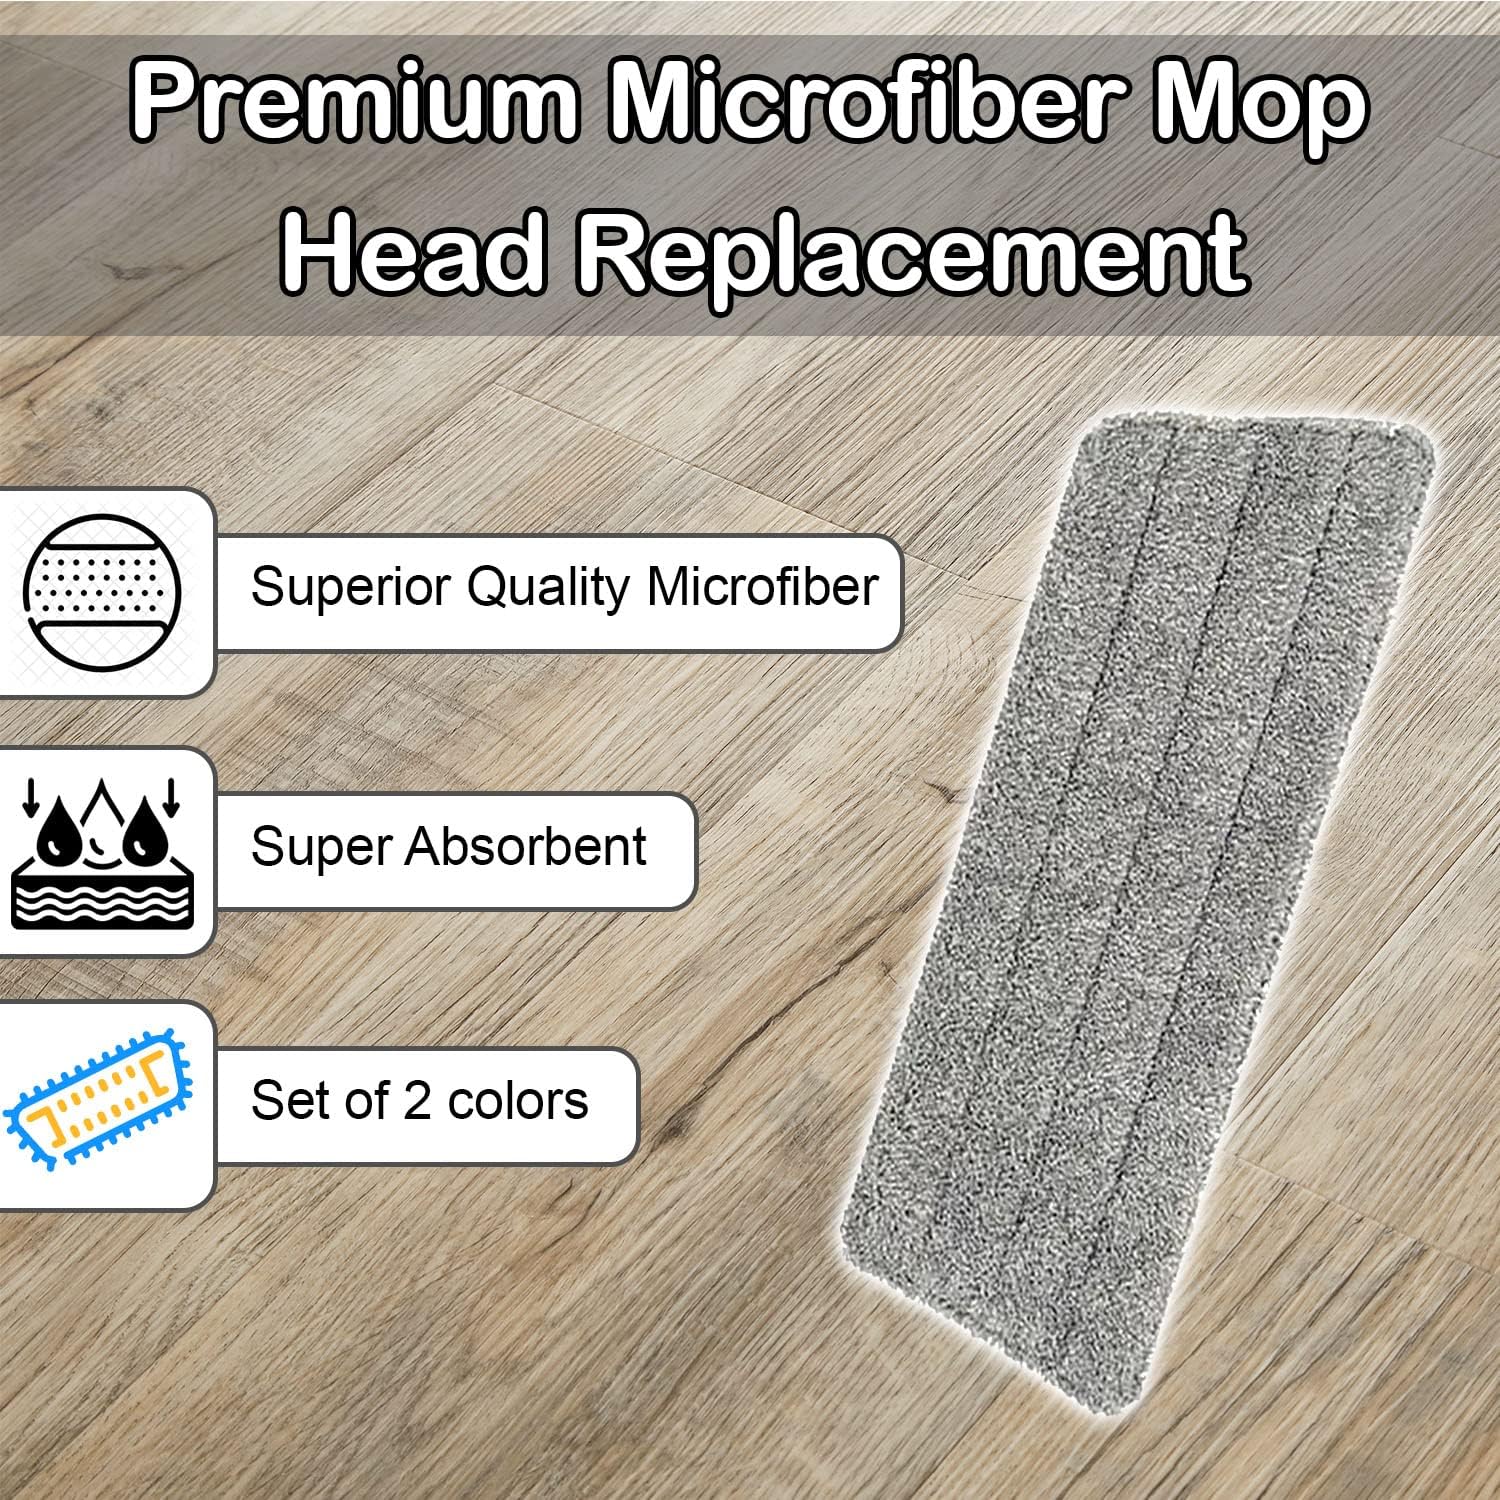 Replacement Mop Head Replacement Microfiber Mop Head Set Of 2